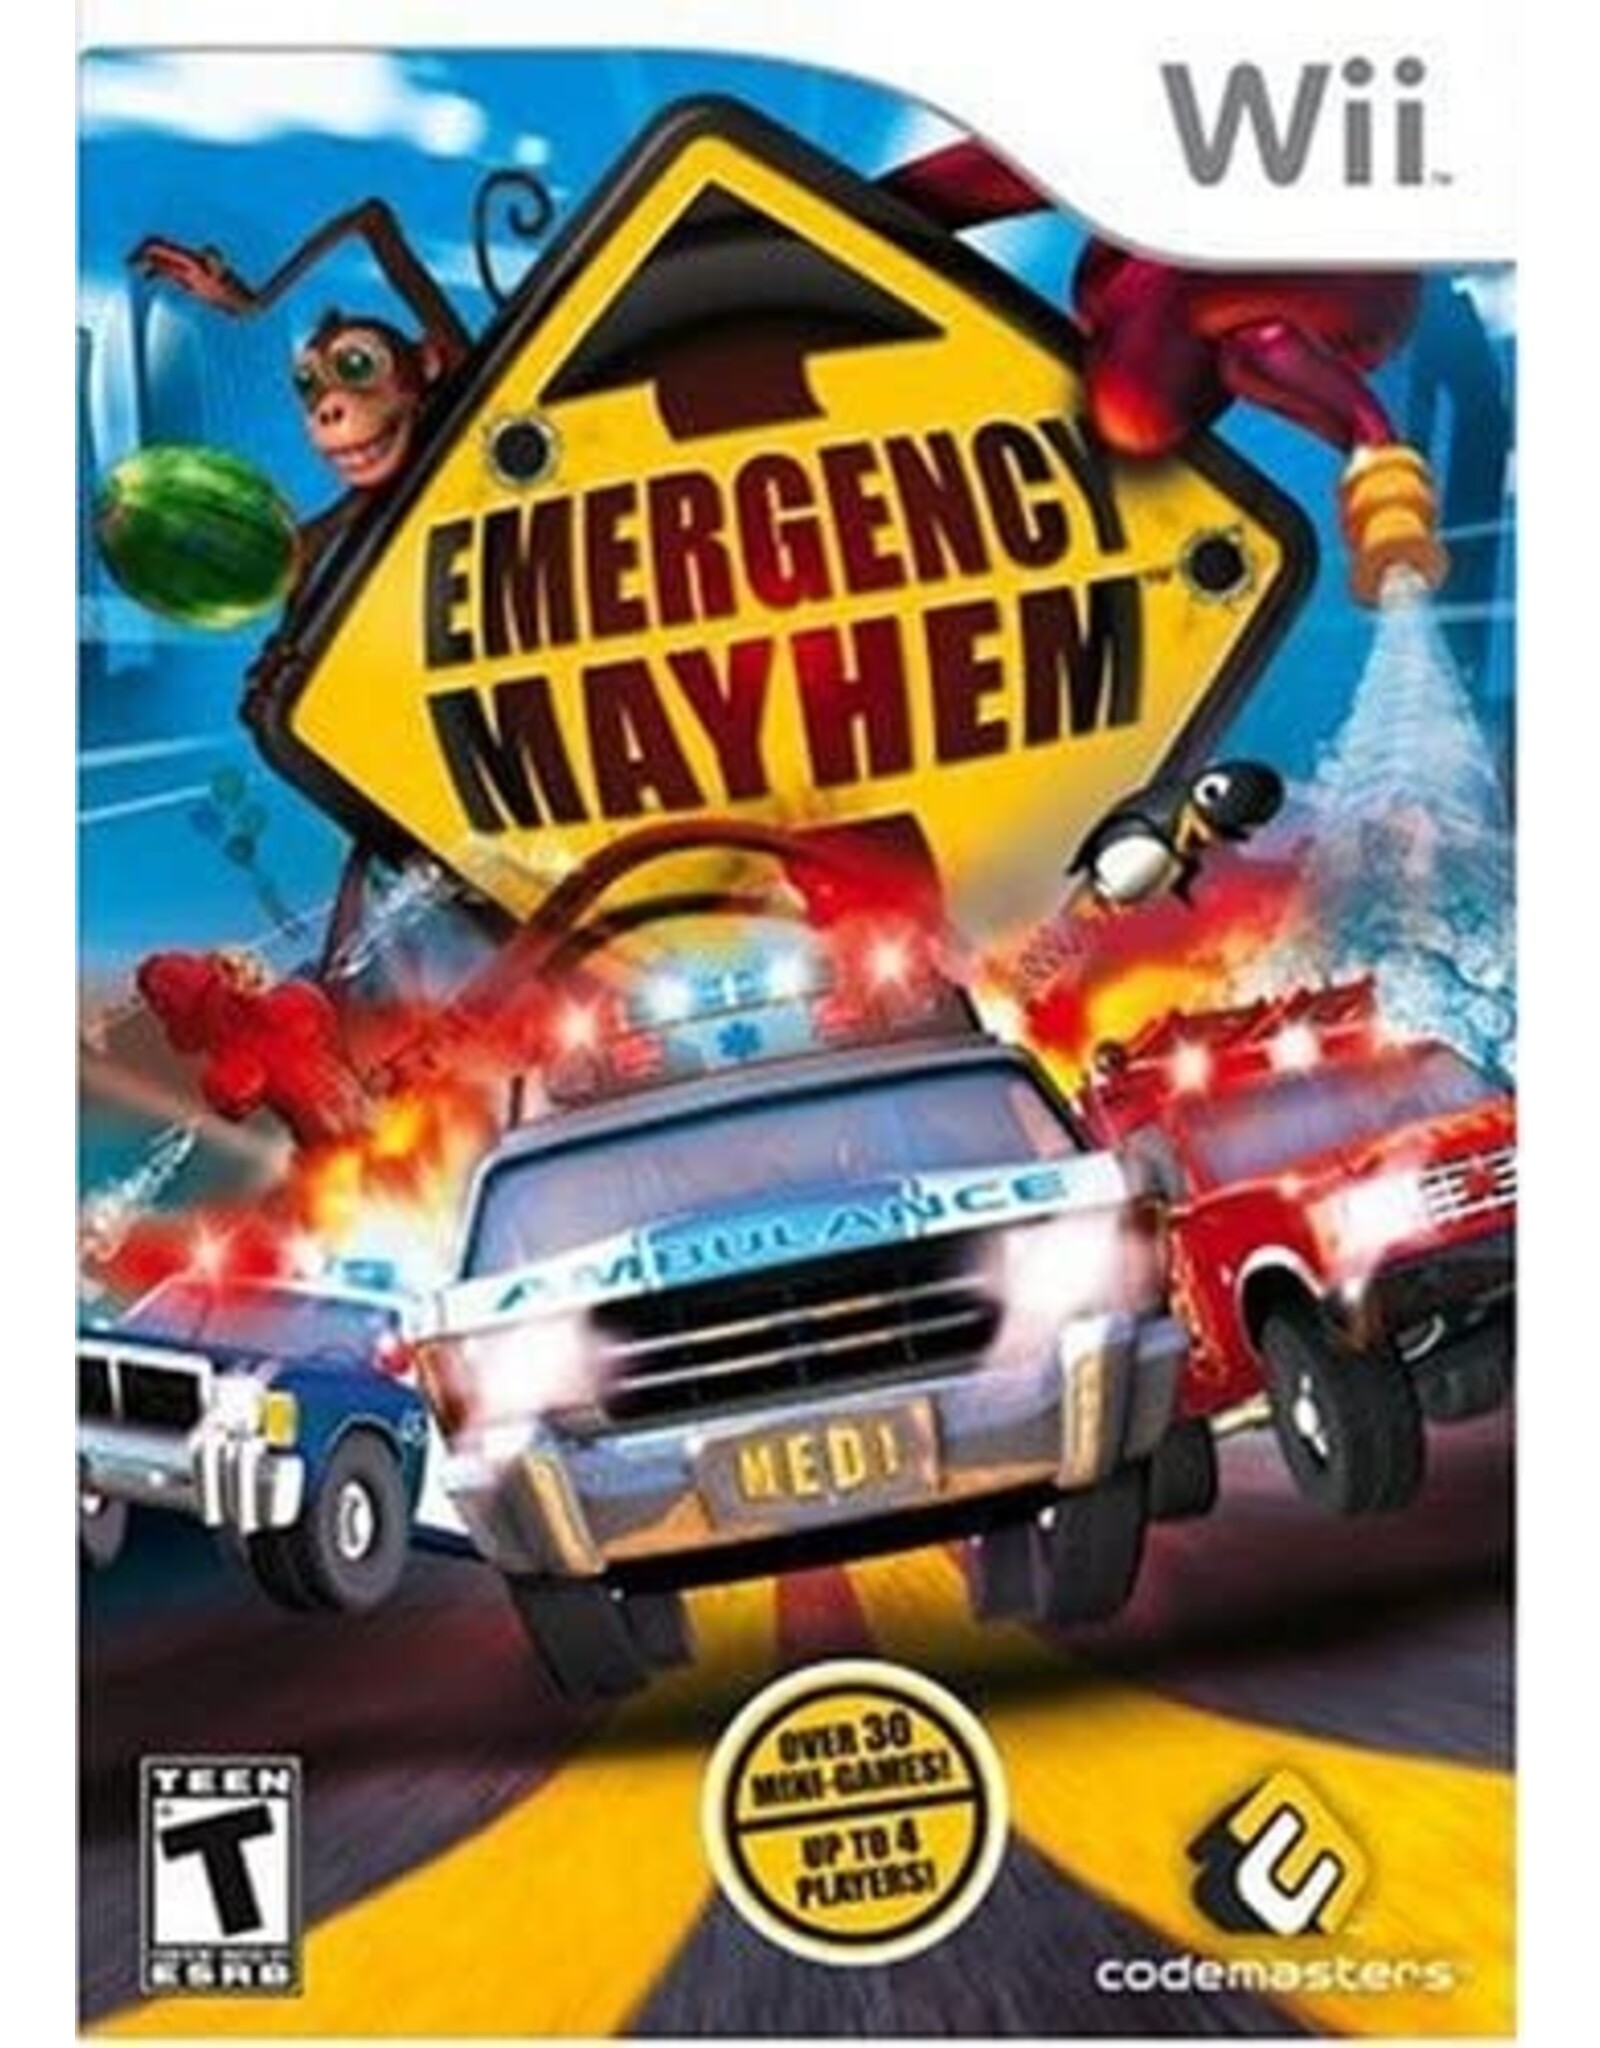 Wii Emergency Mayhem (Used)